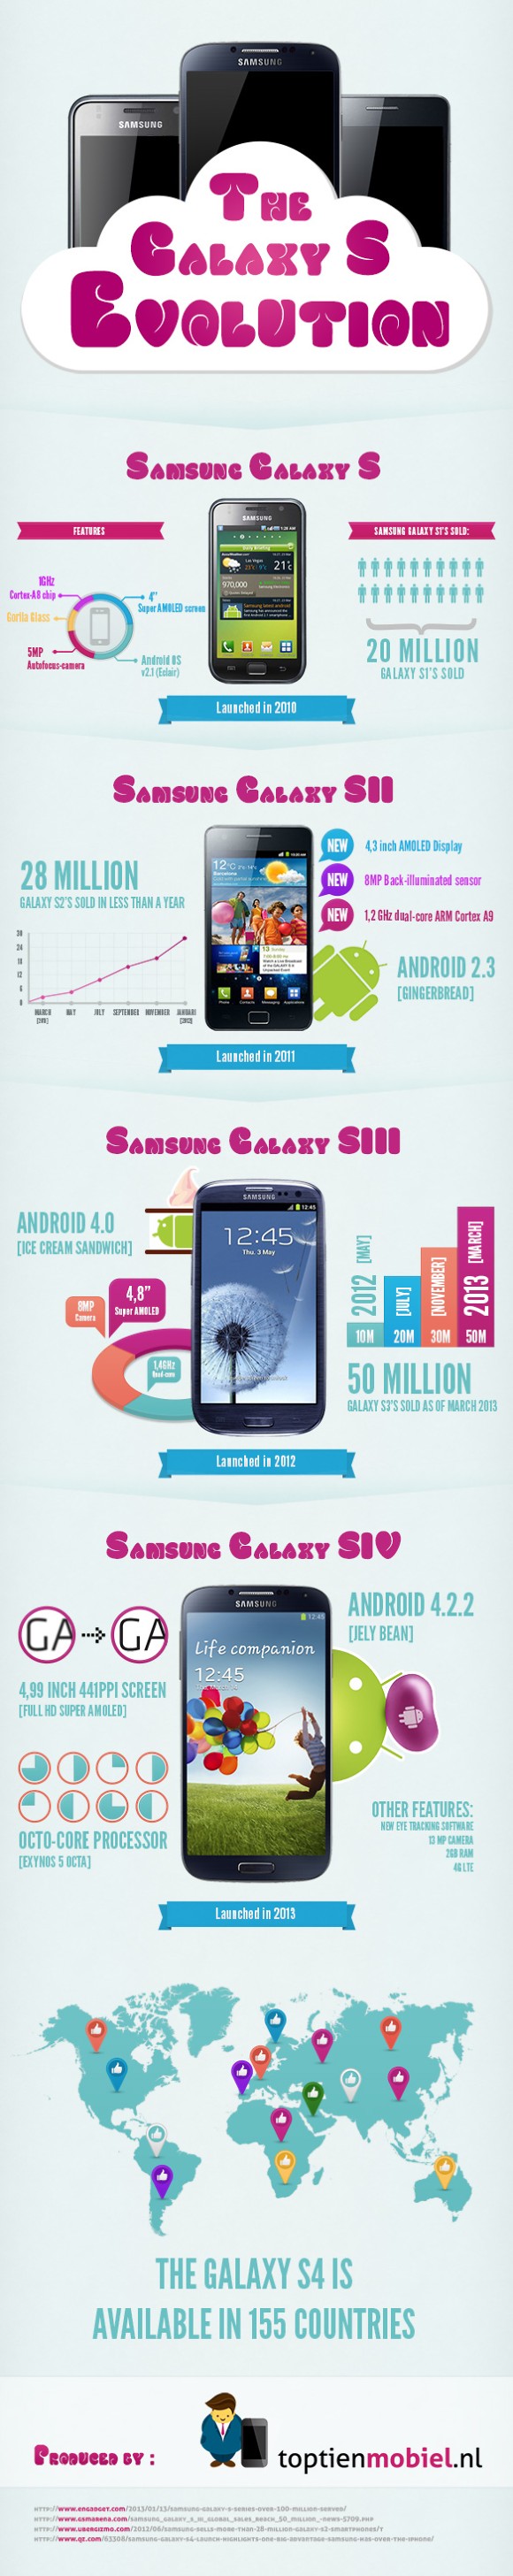 Samsung Galaxy S Evolution